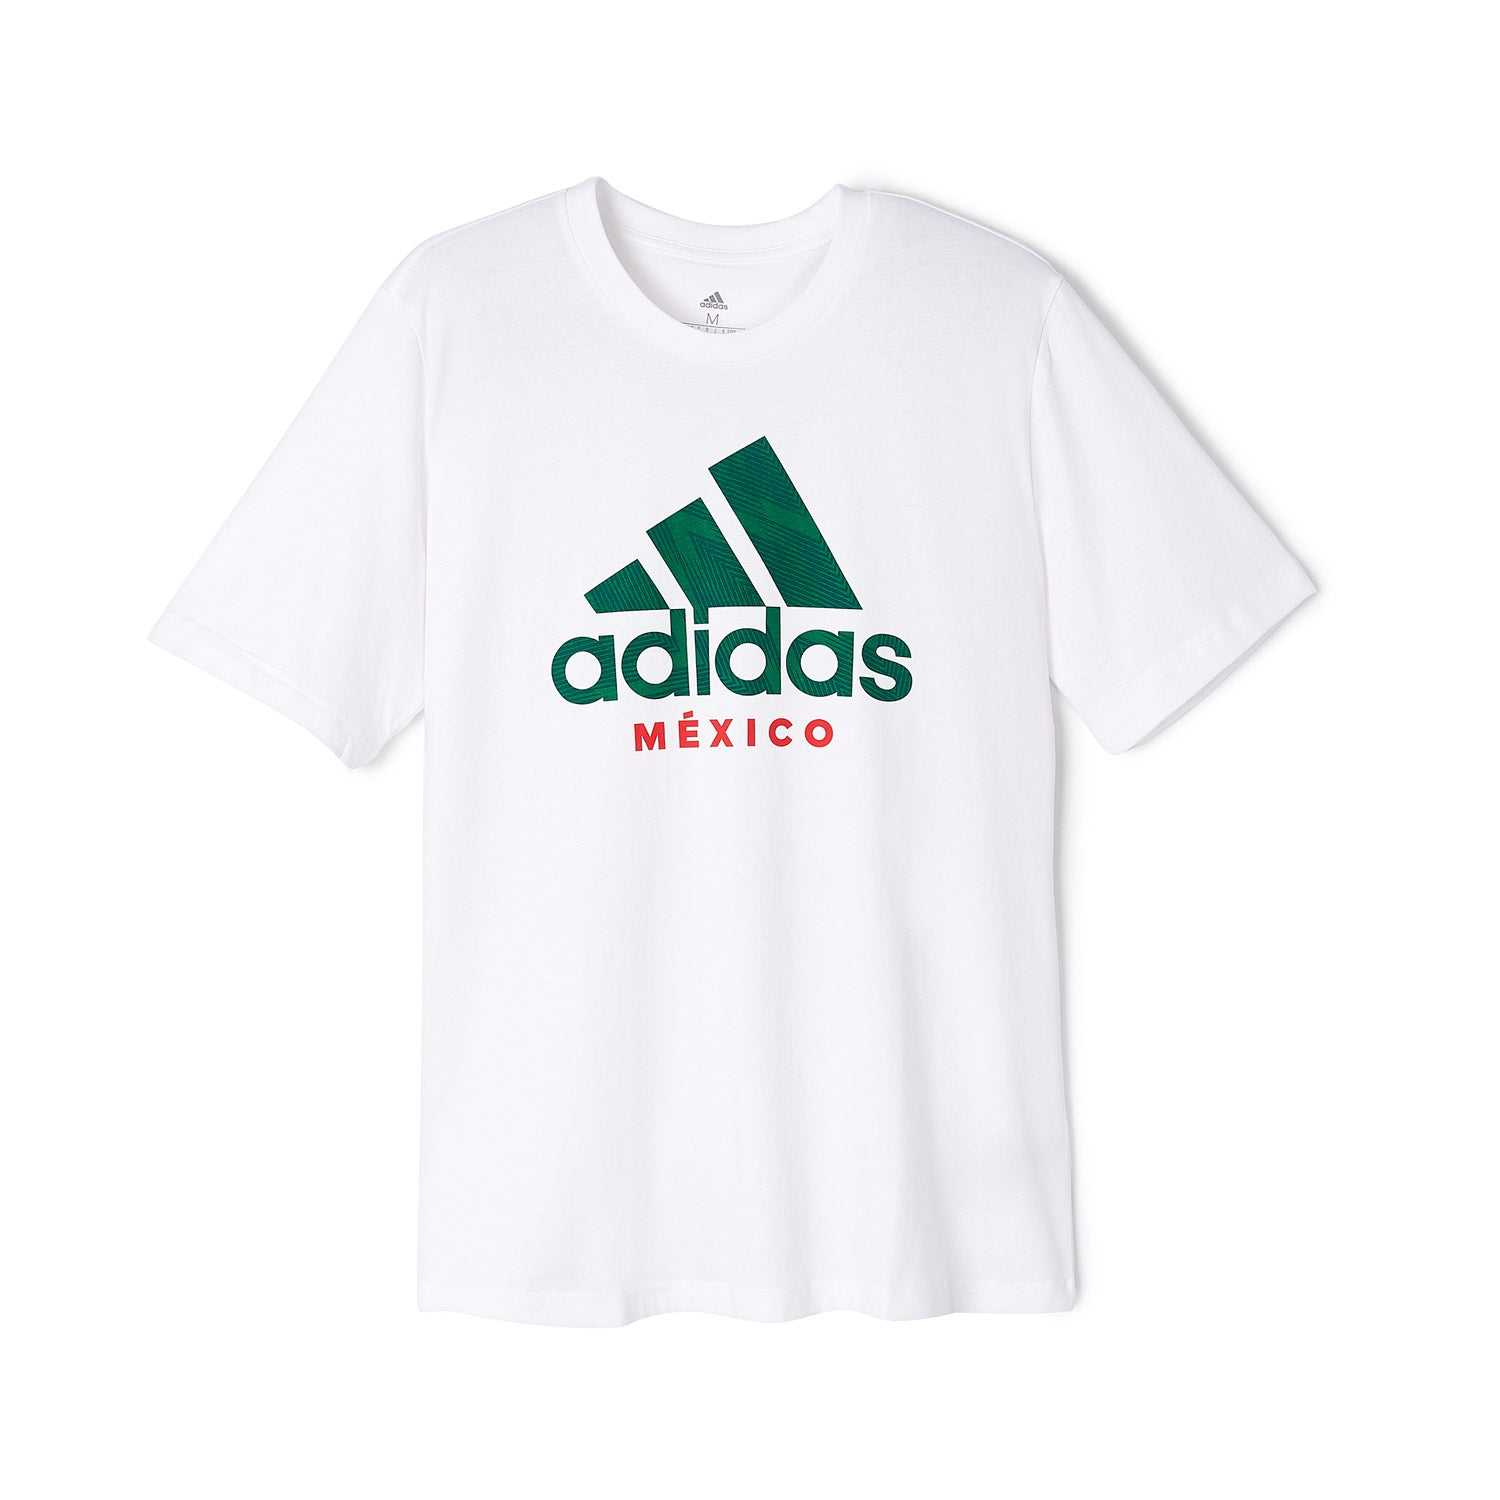 adidas Mexico DNA T-Shirt White - Mens